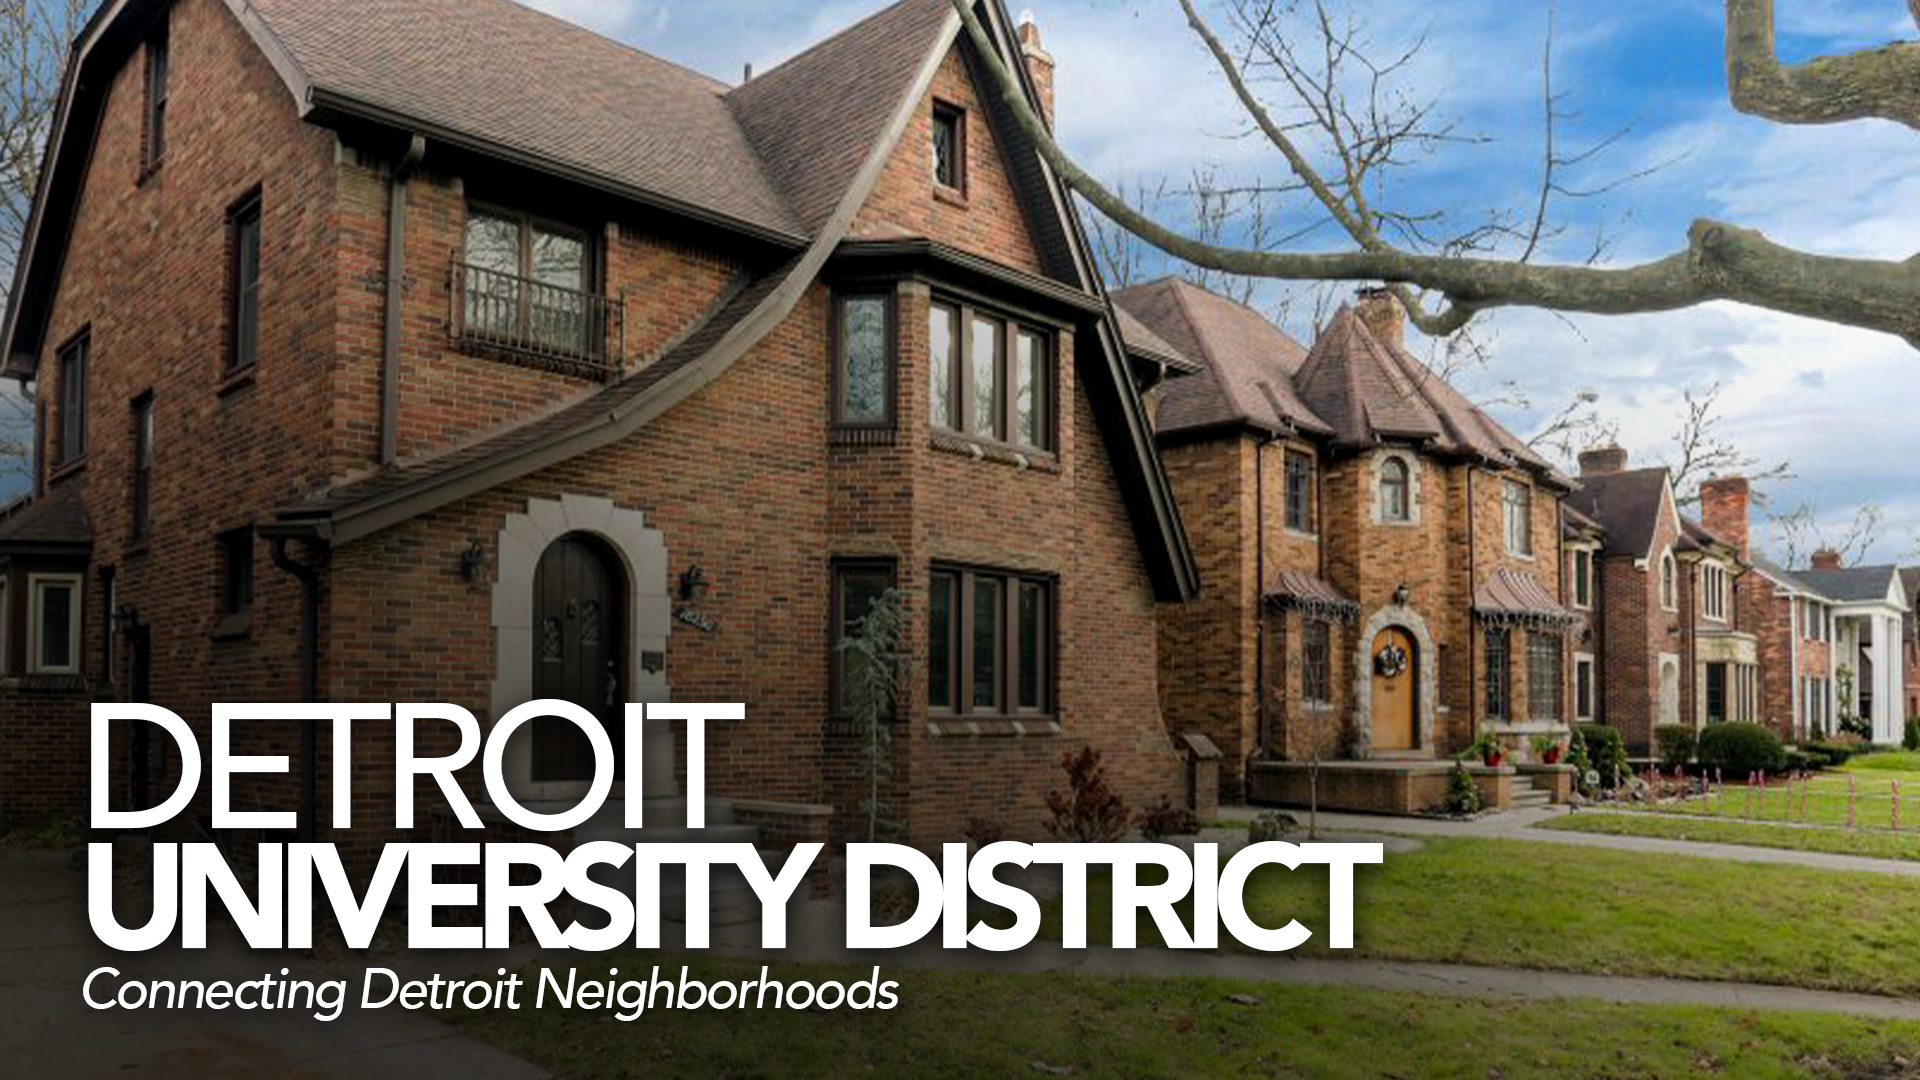 123NET Continues Home Internet Rollout to Detroit University District